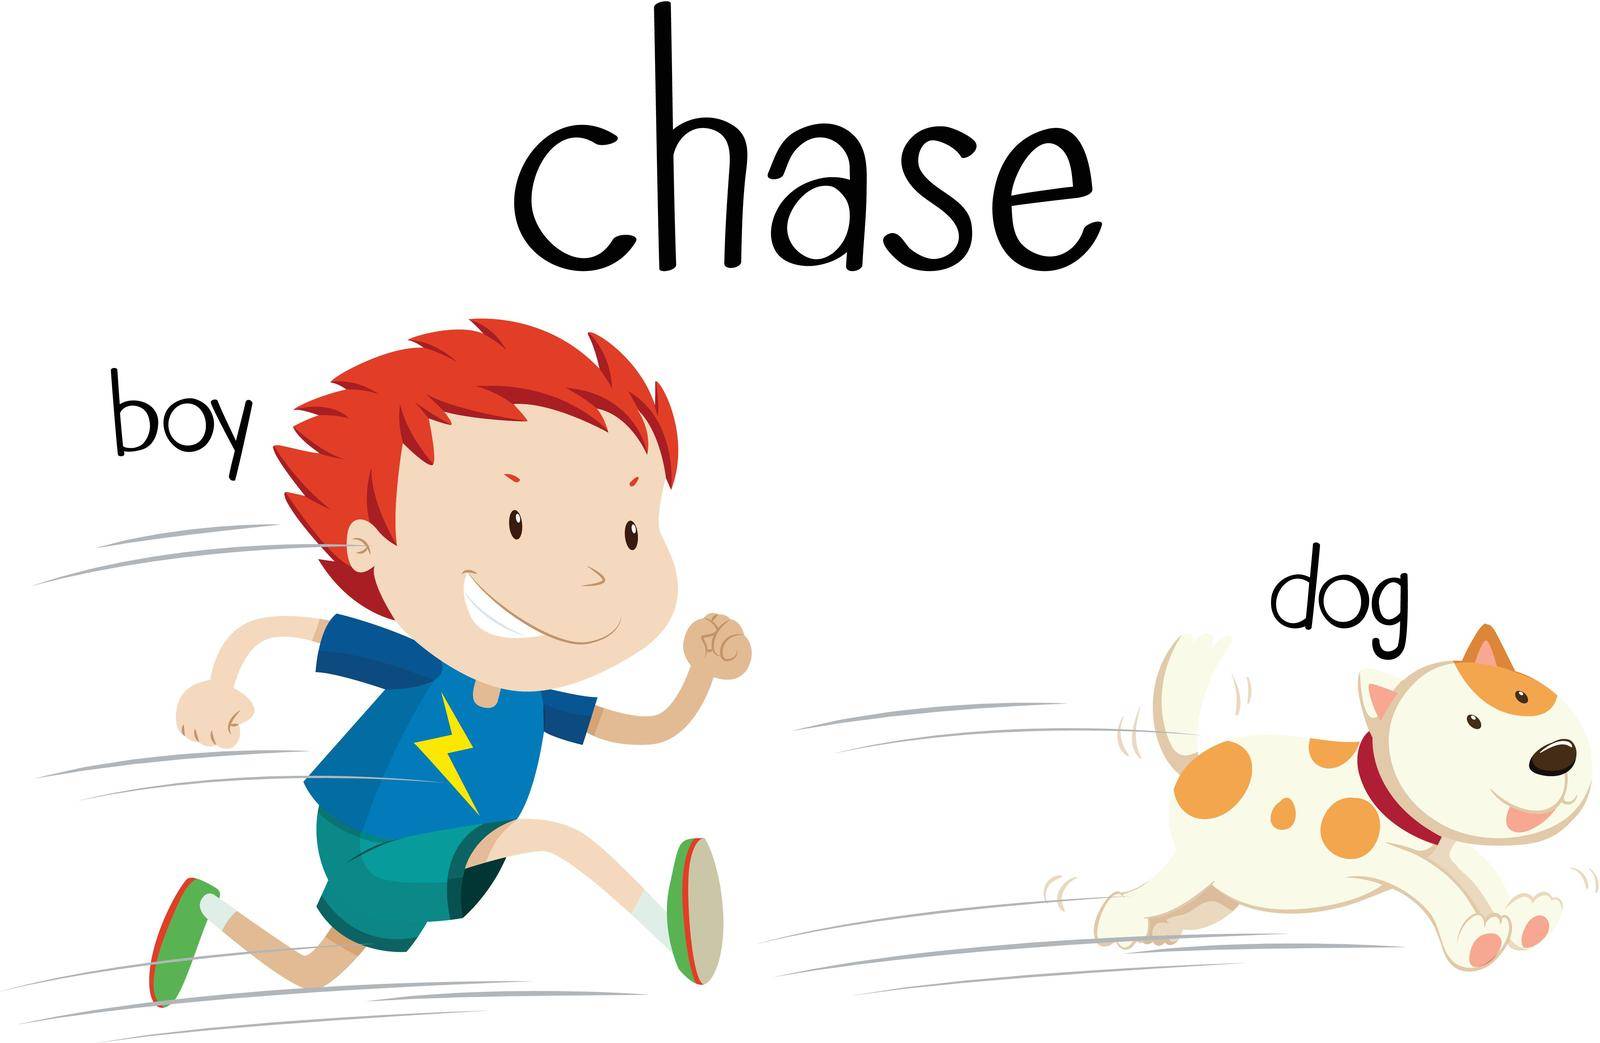 Bad boy chasing little dog illustration